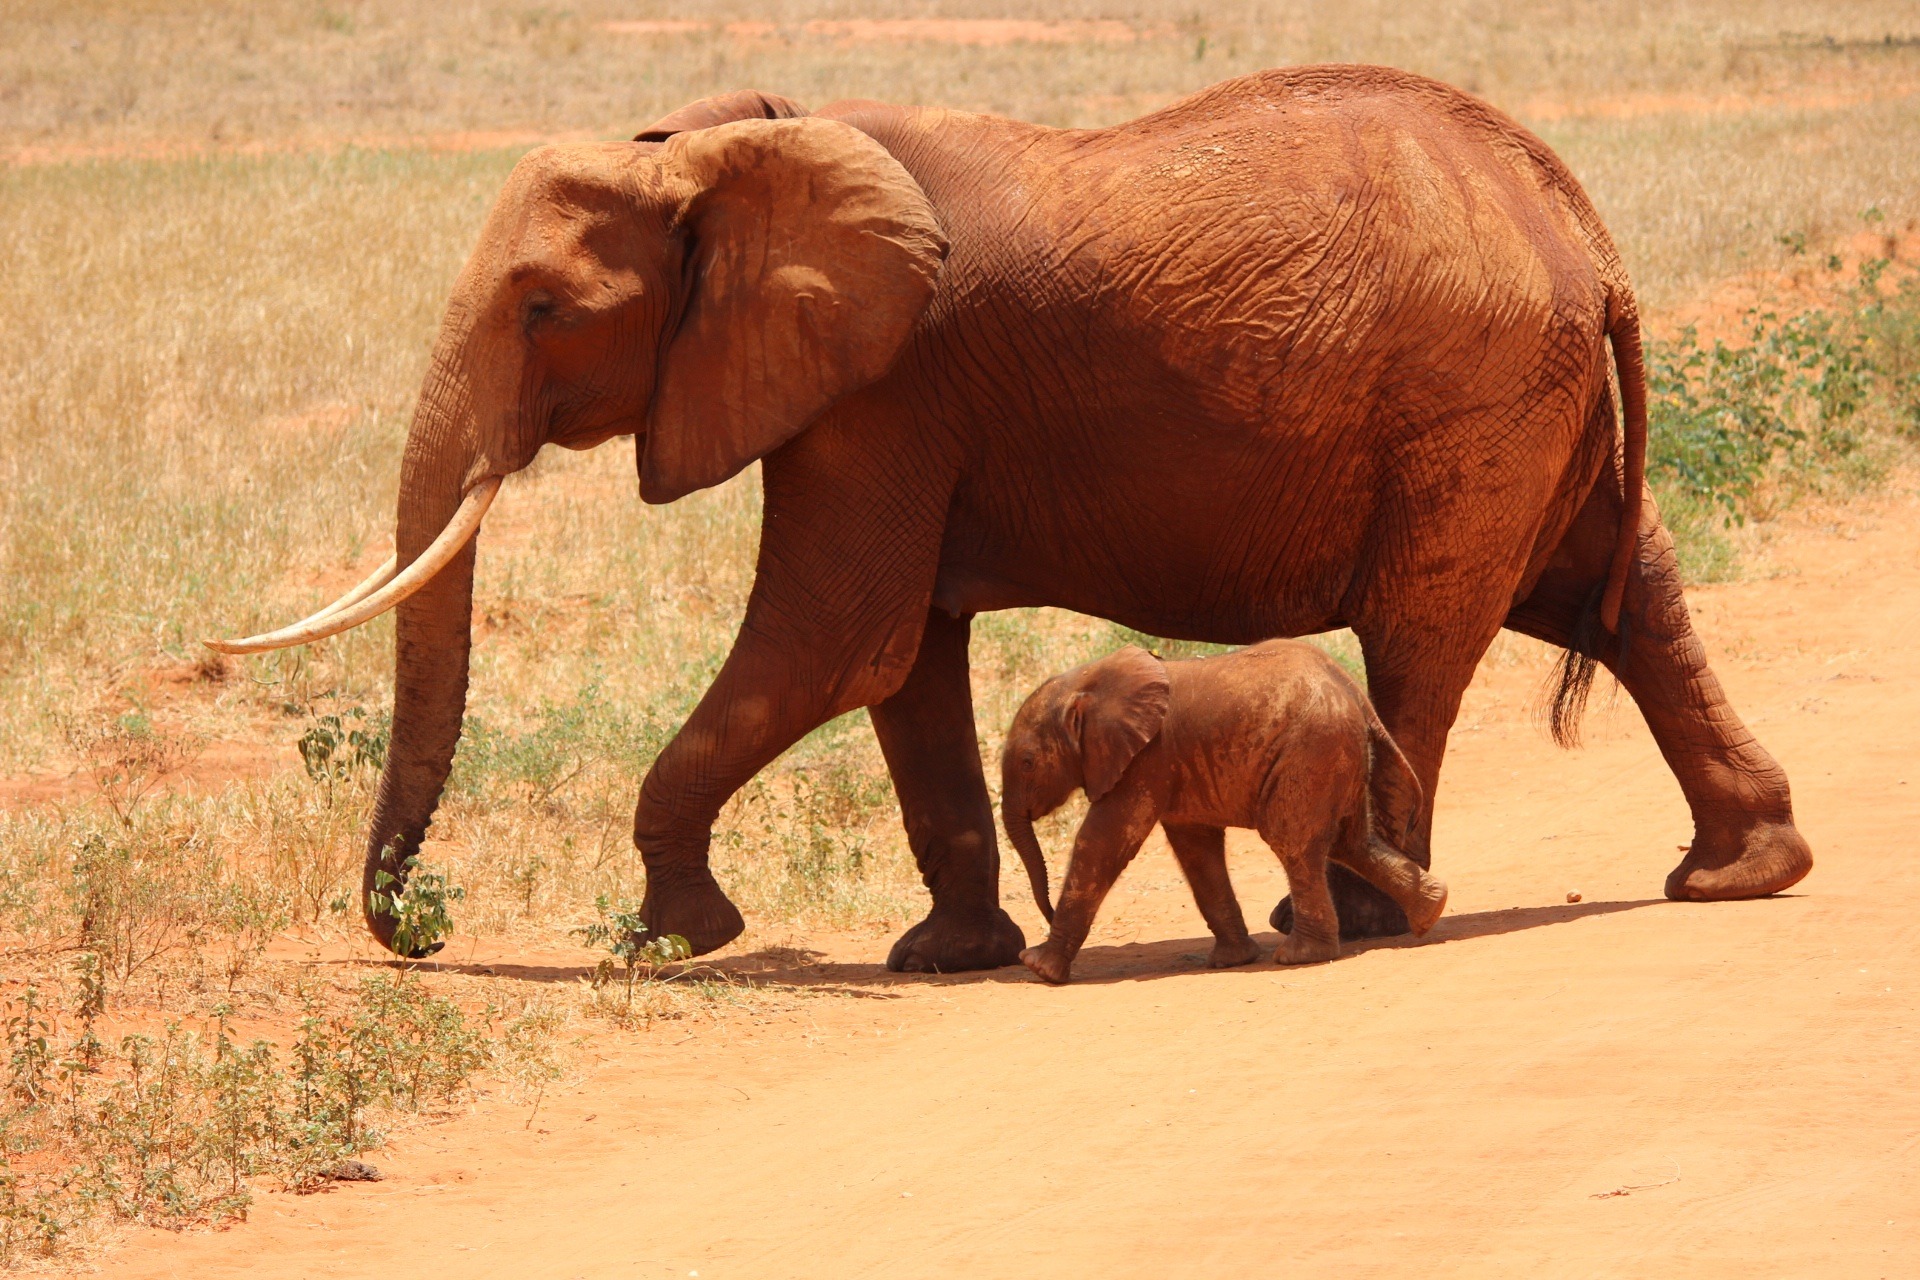 Mother elephant with calf in the savannah, Tsavo Kenya by Kirsi Kataniemi